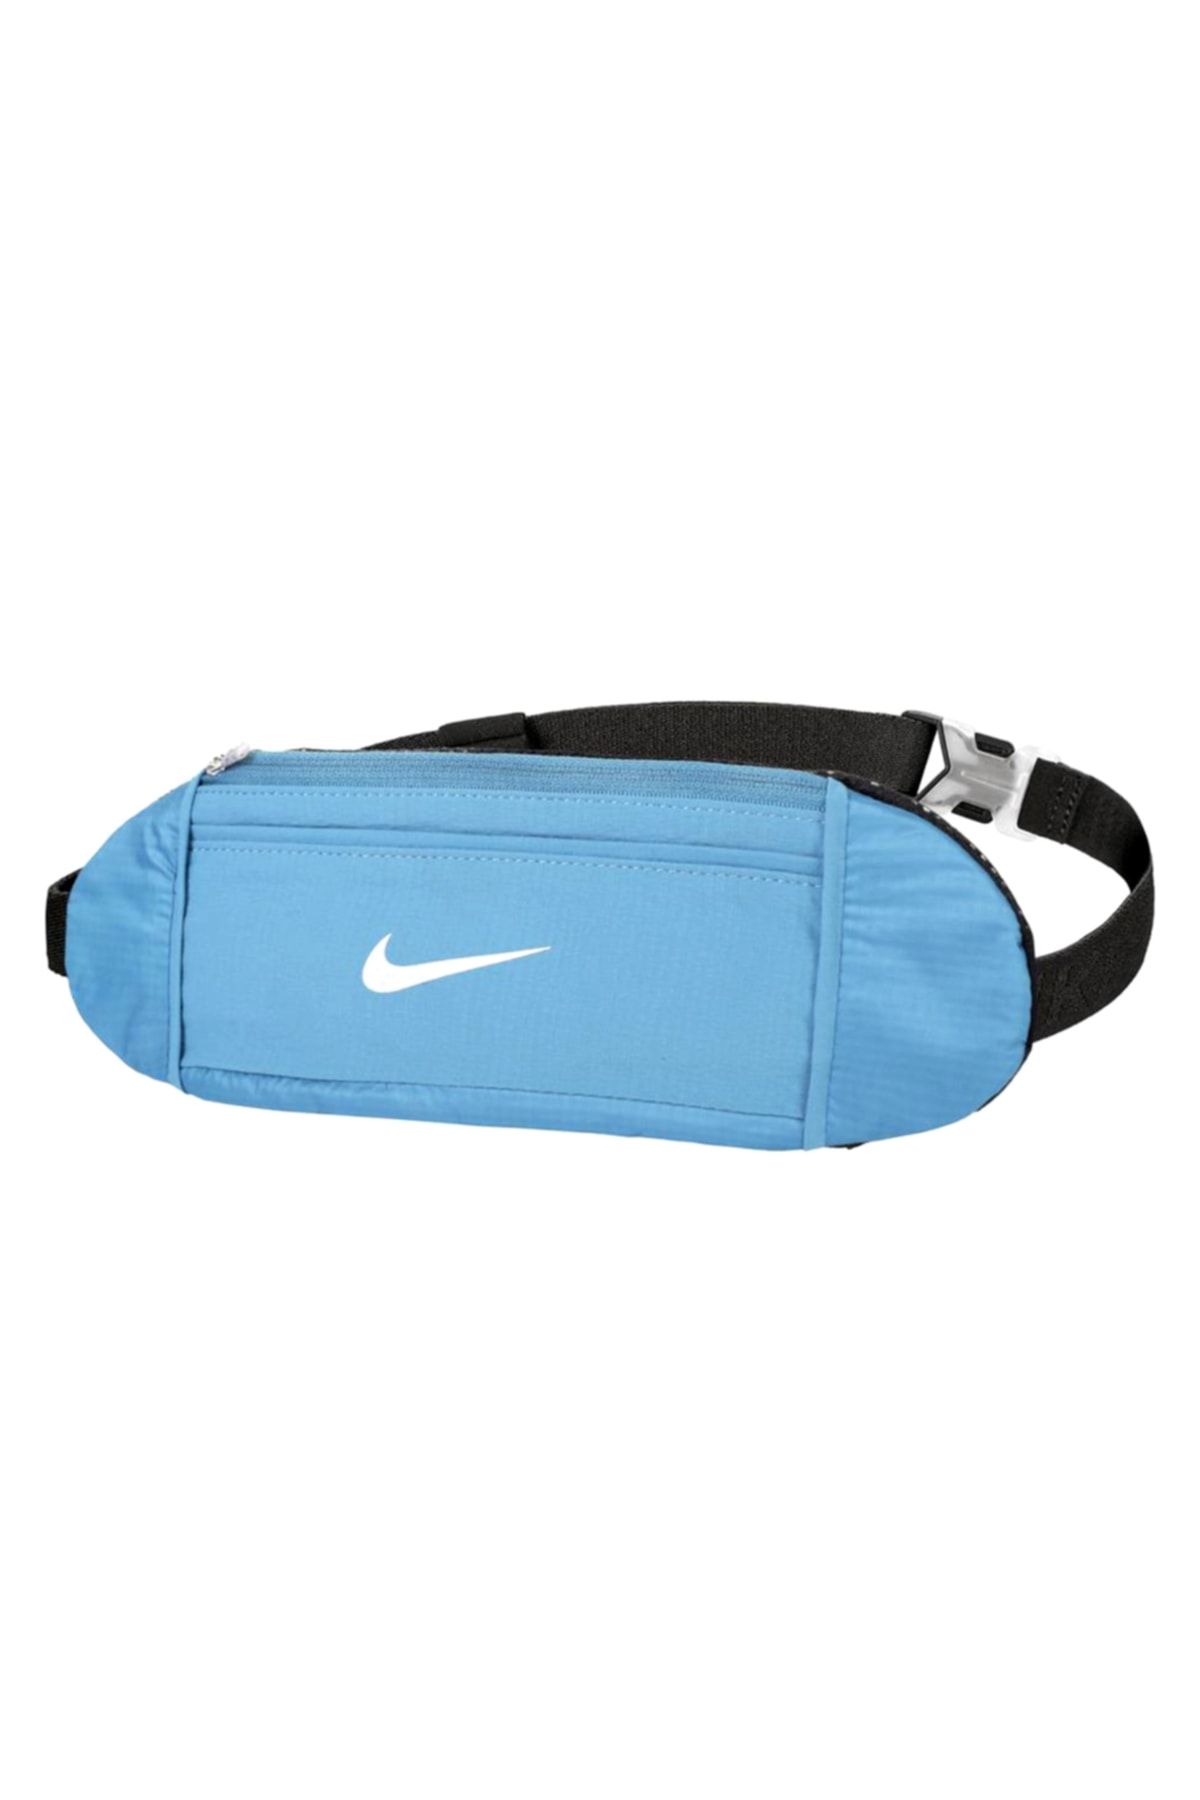 Nike Challenger Waist Pack Small Riftblue/black/silver Osfm, One Size/10